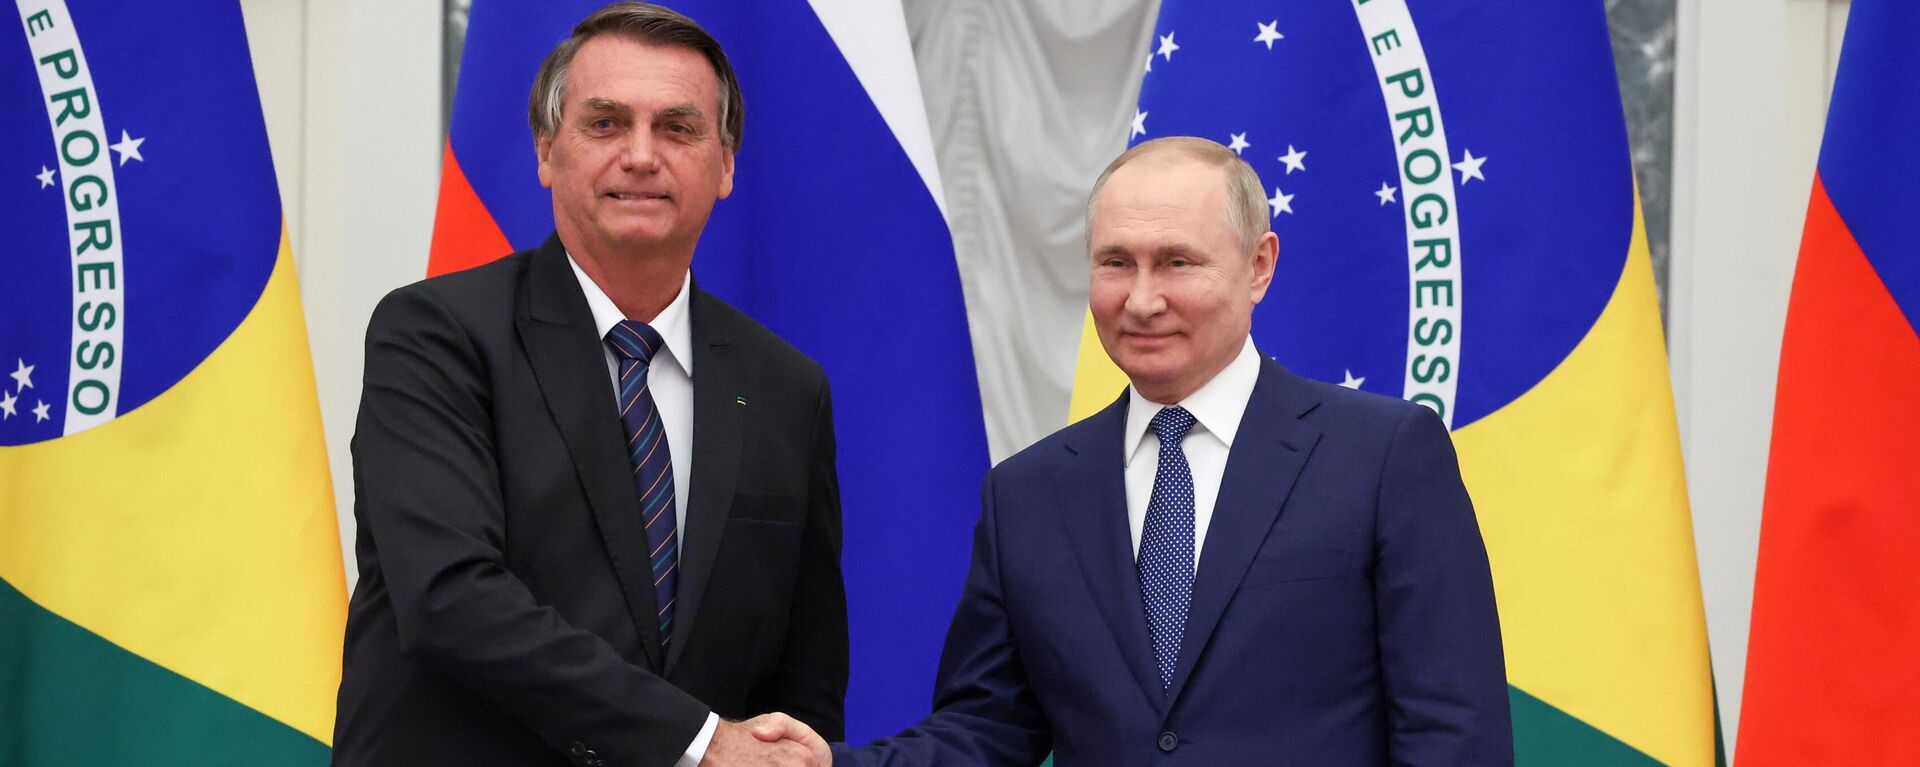 Los presidentes de Brasil y de Rusia, Jair Bolsonaro y Vladímir Putin  - Sputnik Mundo, 1920, 13.07.2022